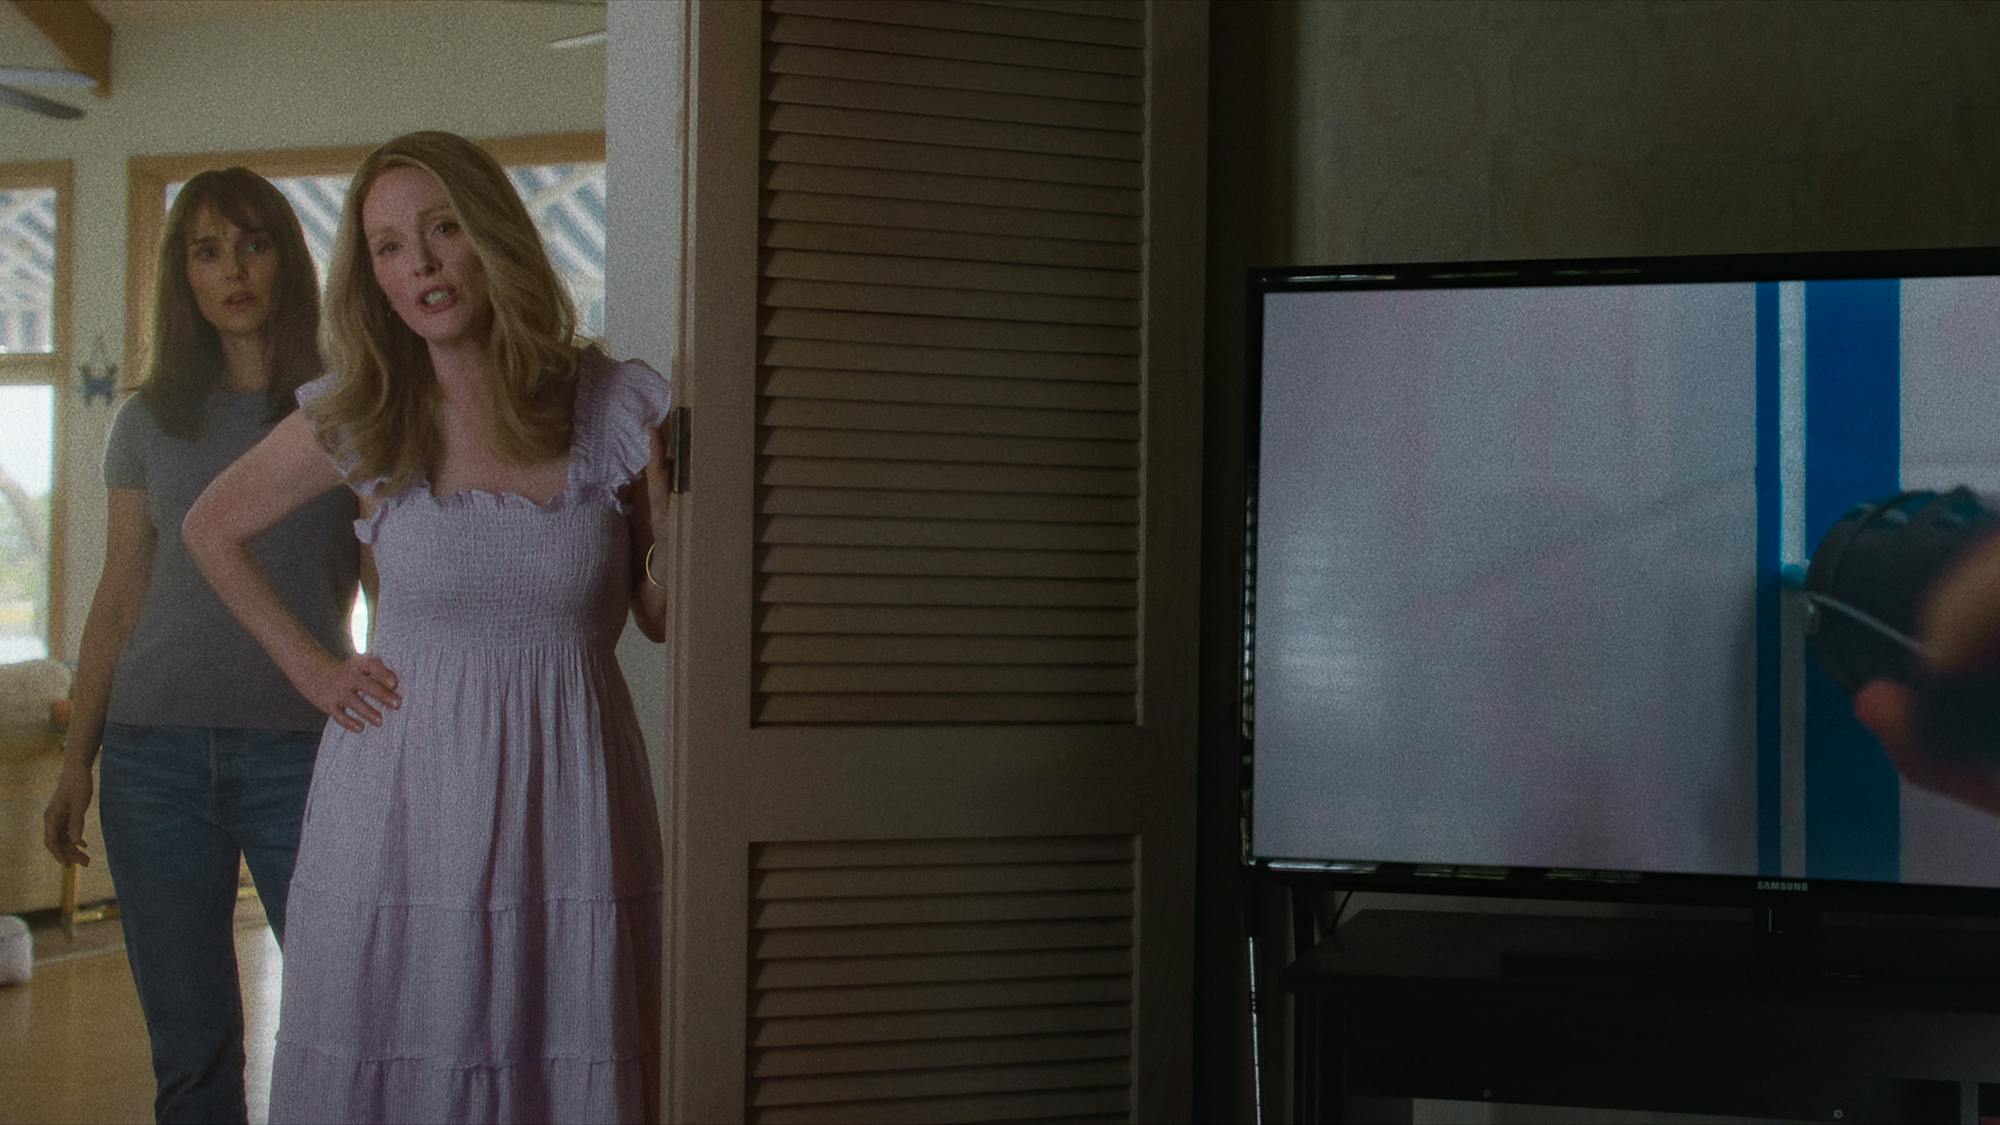 Elizabeth Berry (Natalie Portman) and Gracie Atherton-Yoo (Julianne Moore) stand in a doorway.